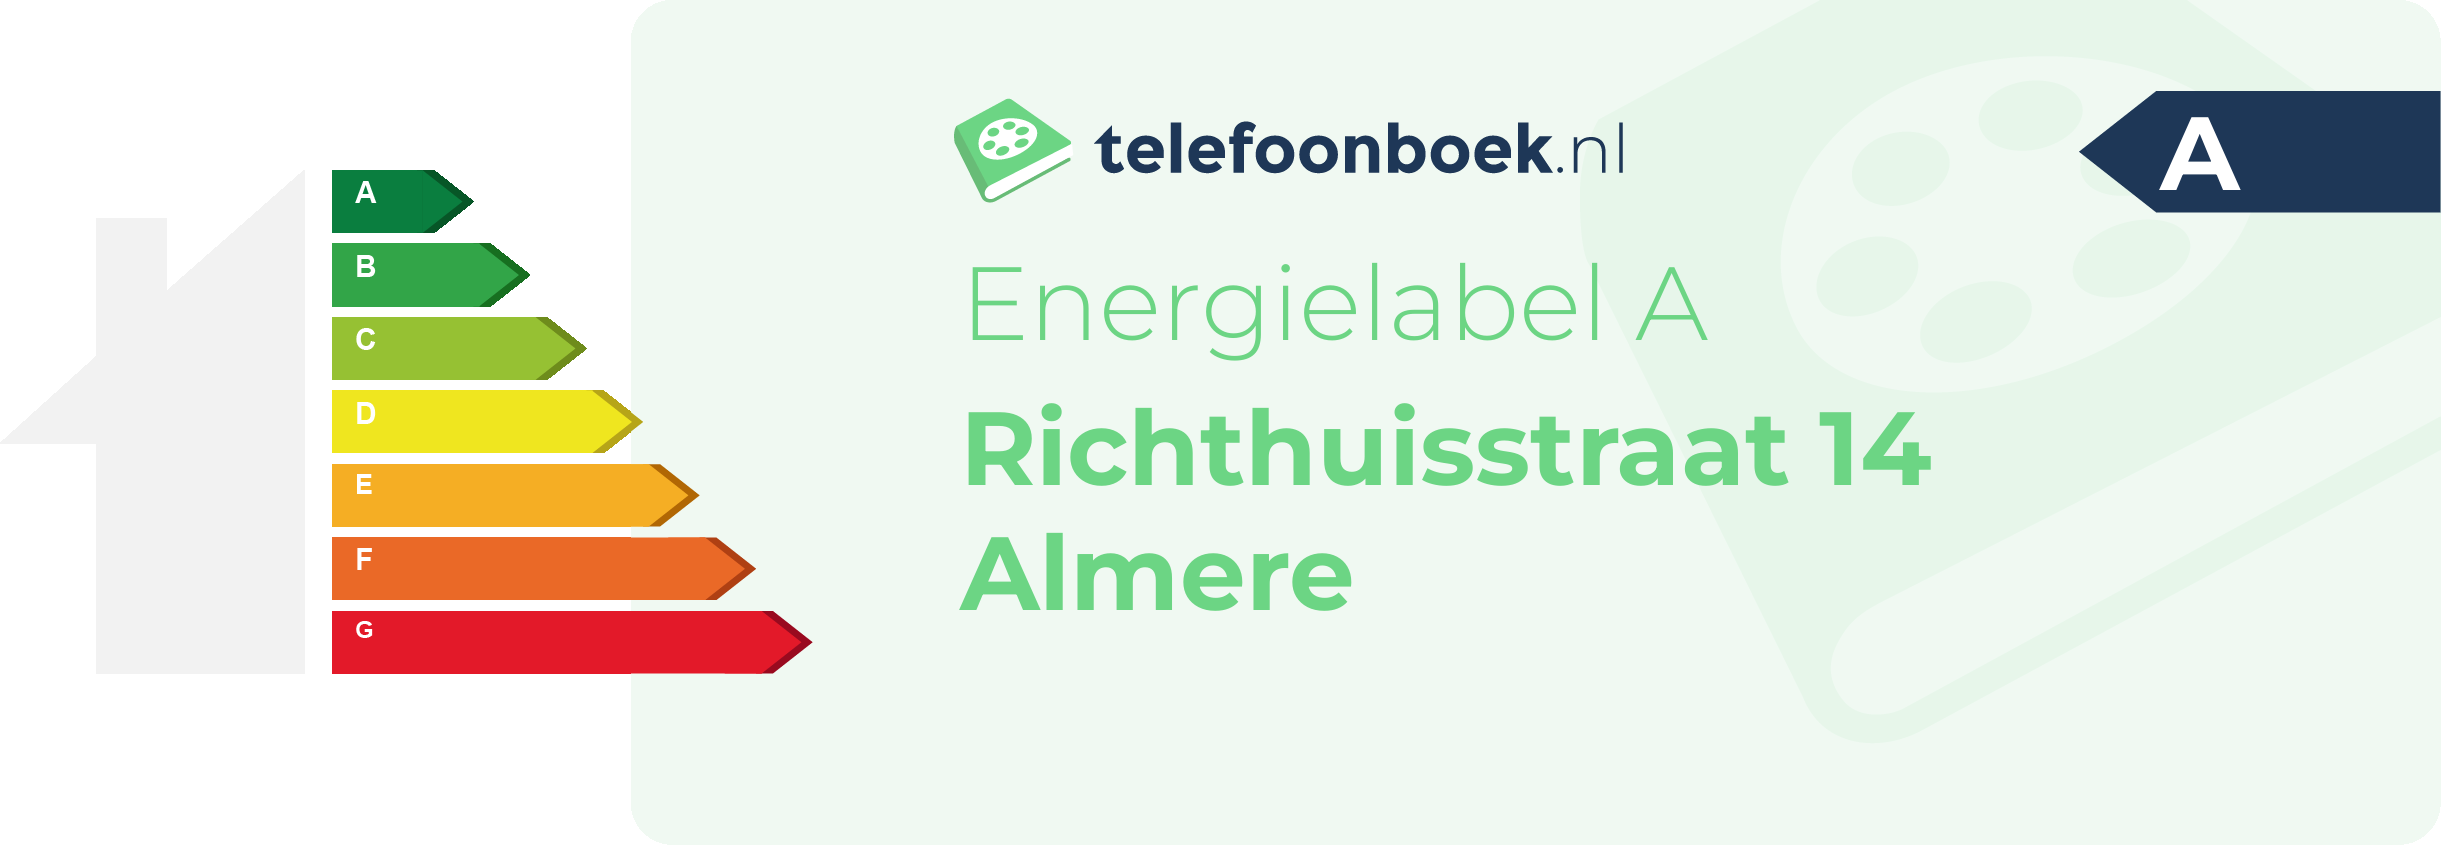 Energielabel Richthuisstraat 14 Almere